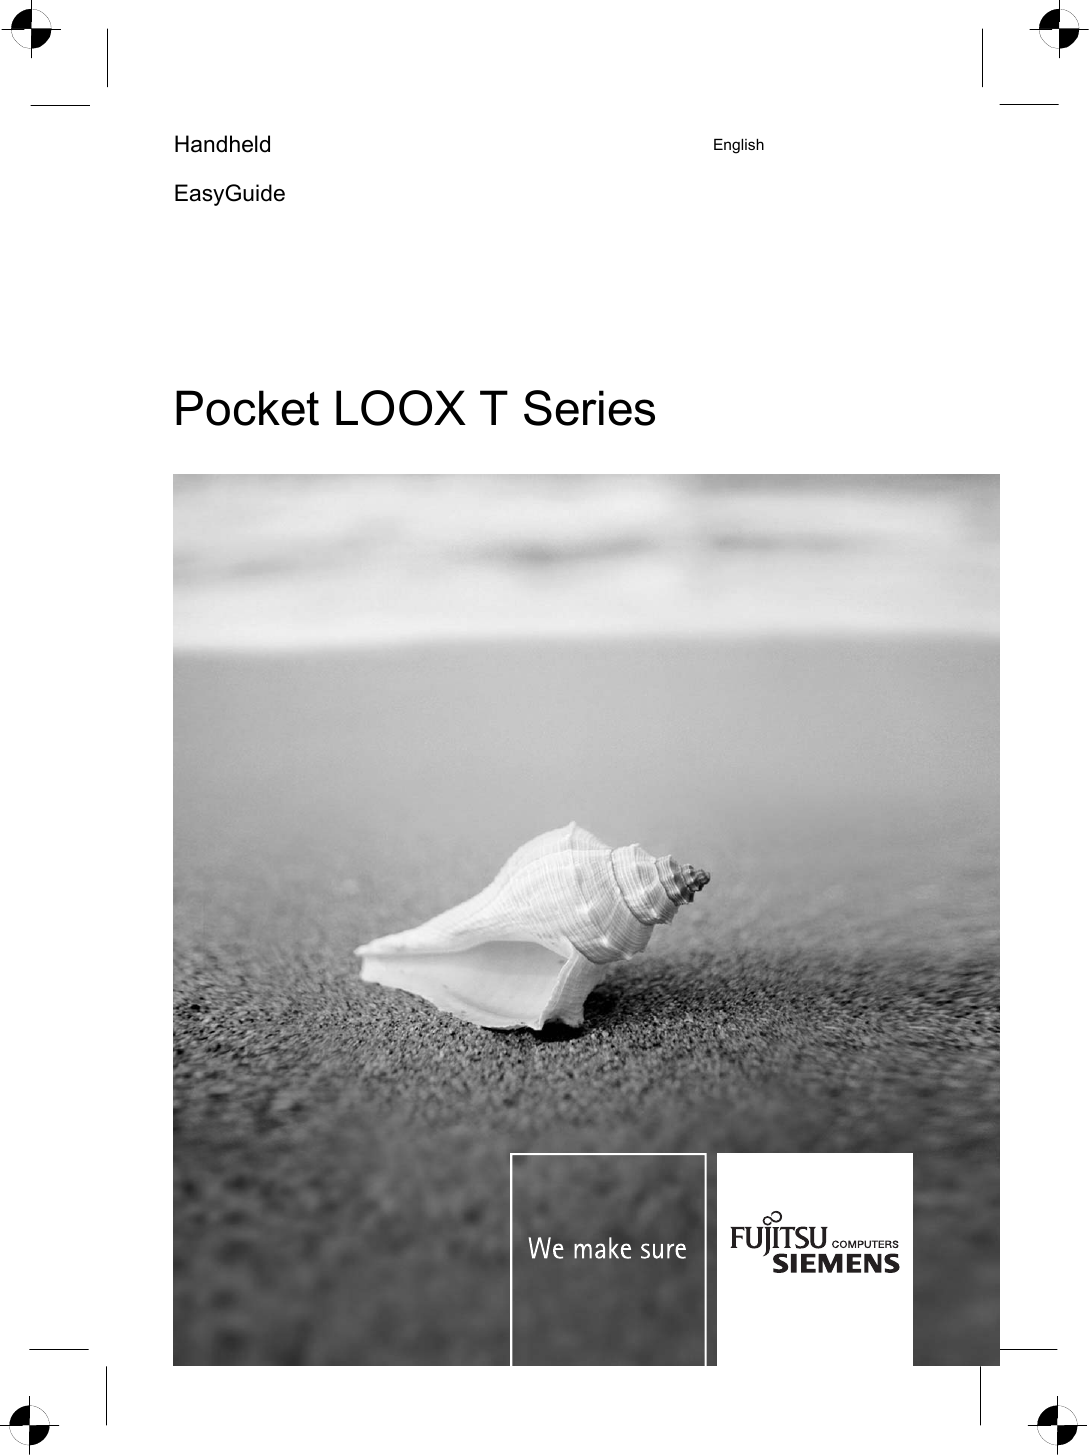      Handheld EasyGuide English Pocket LOOX T Series             